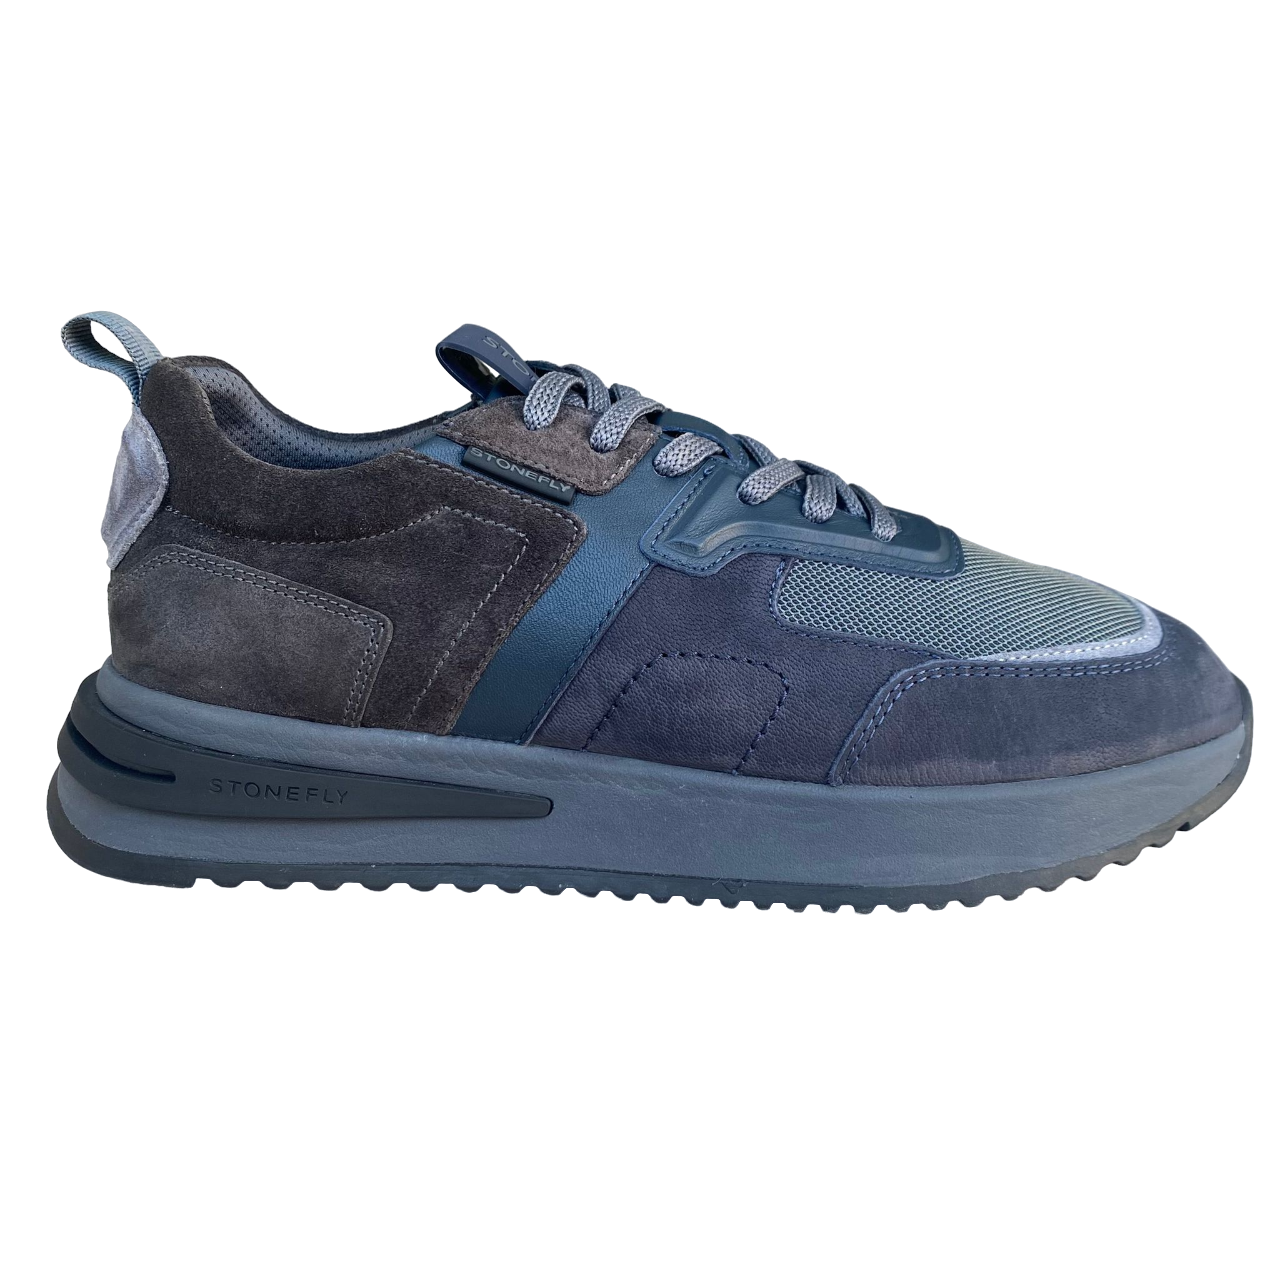 Stonefly scarpa sneakers da uomo Fly 2 220398 BI8 blu-grigio